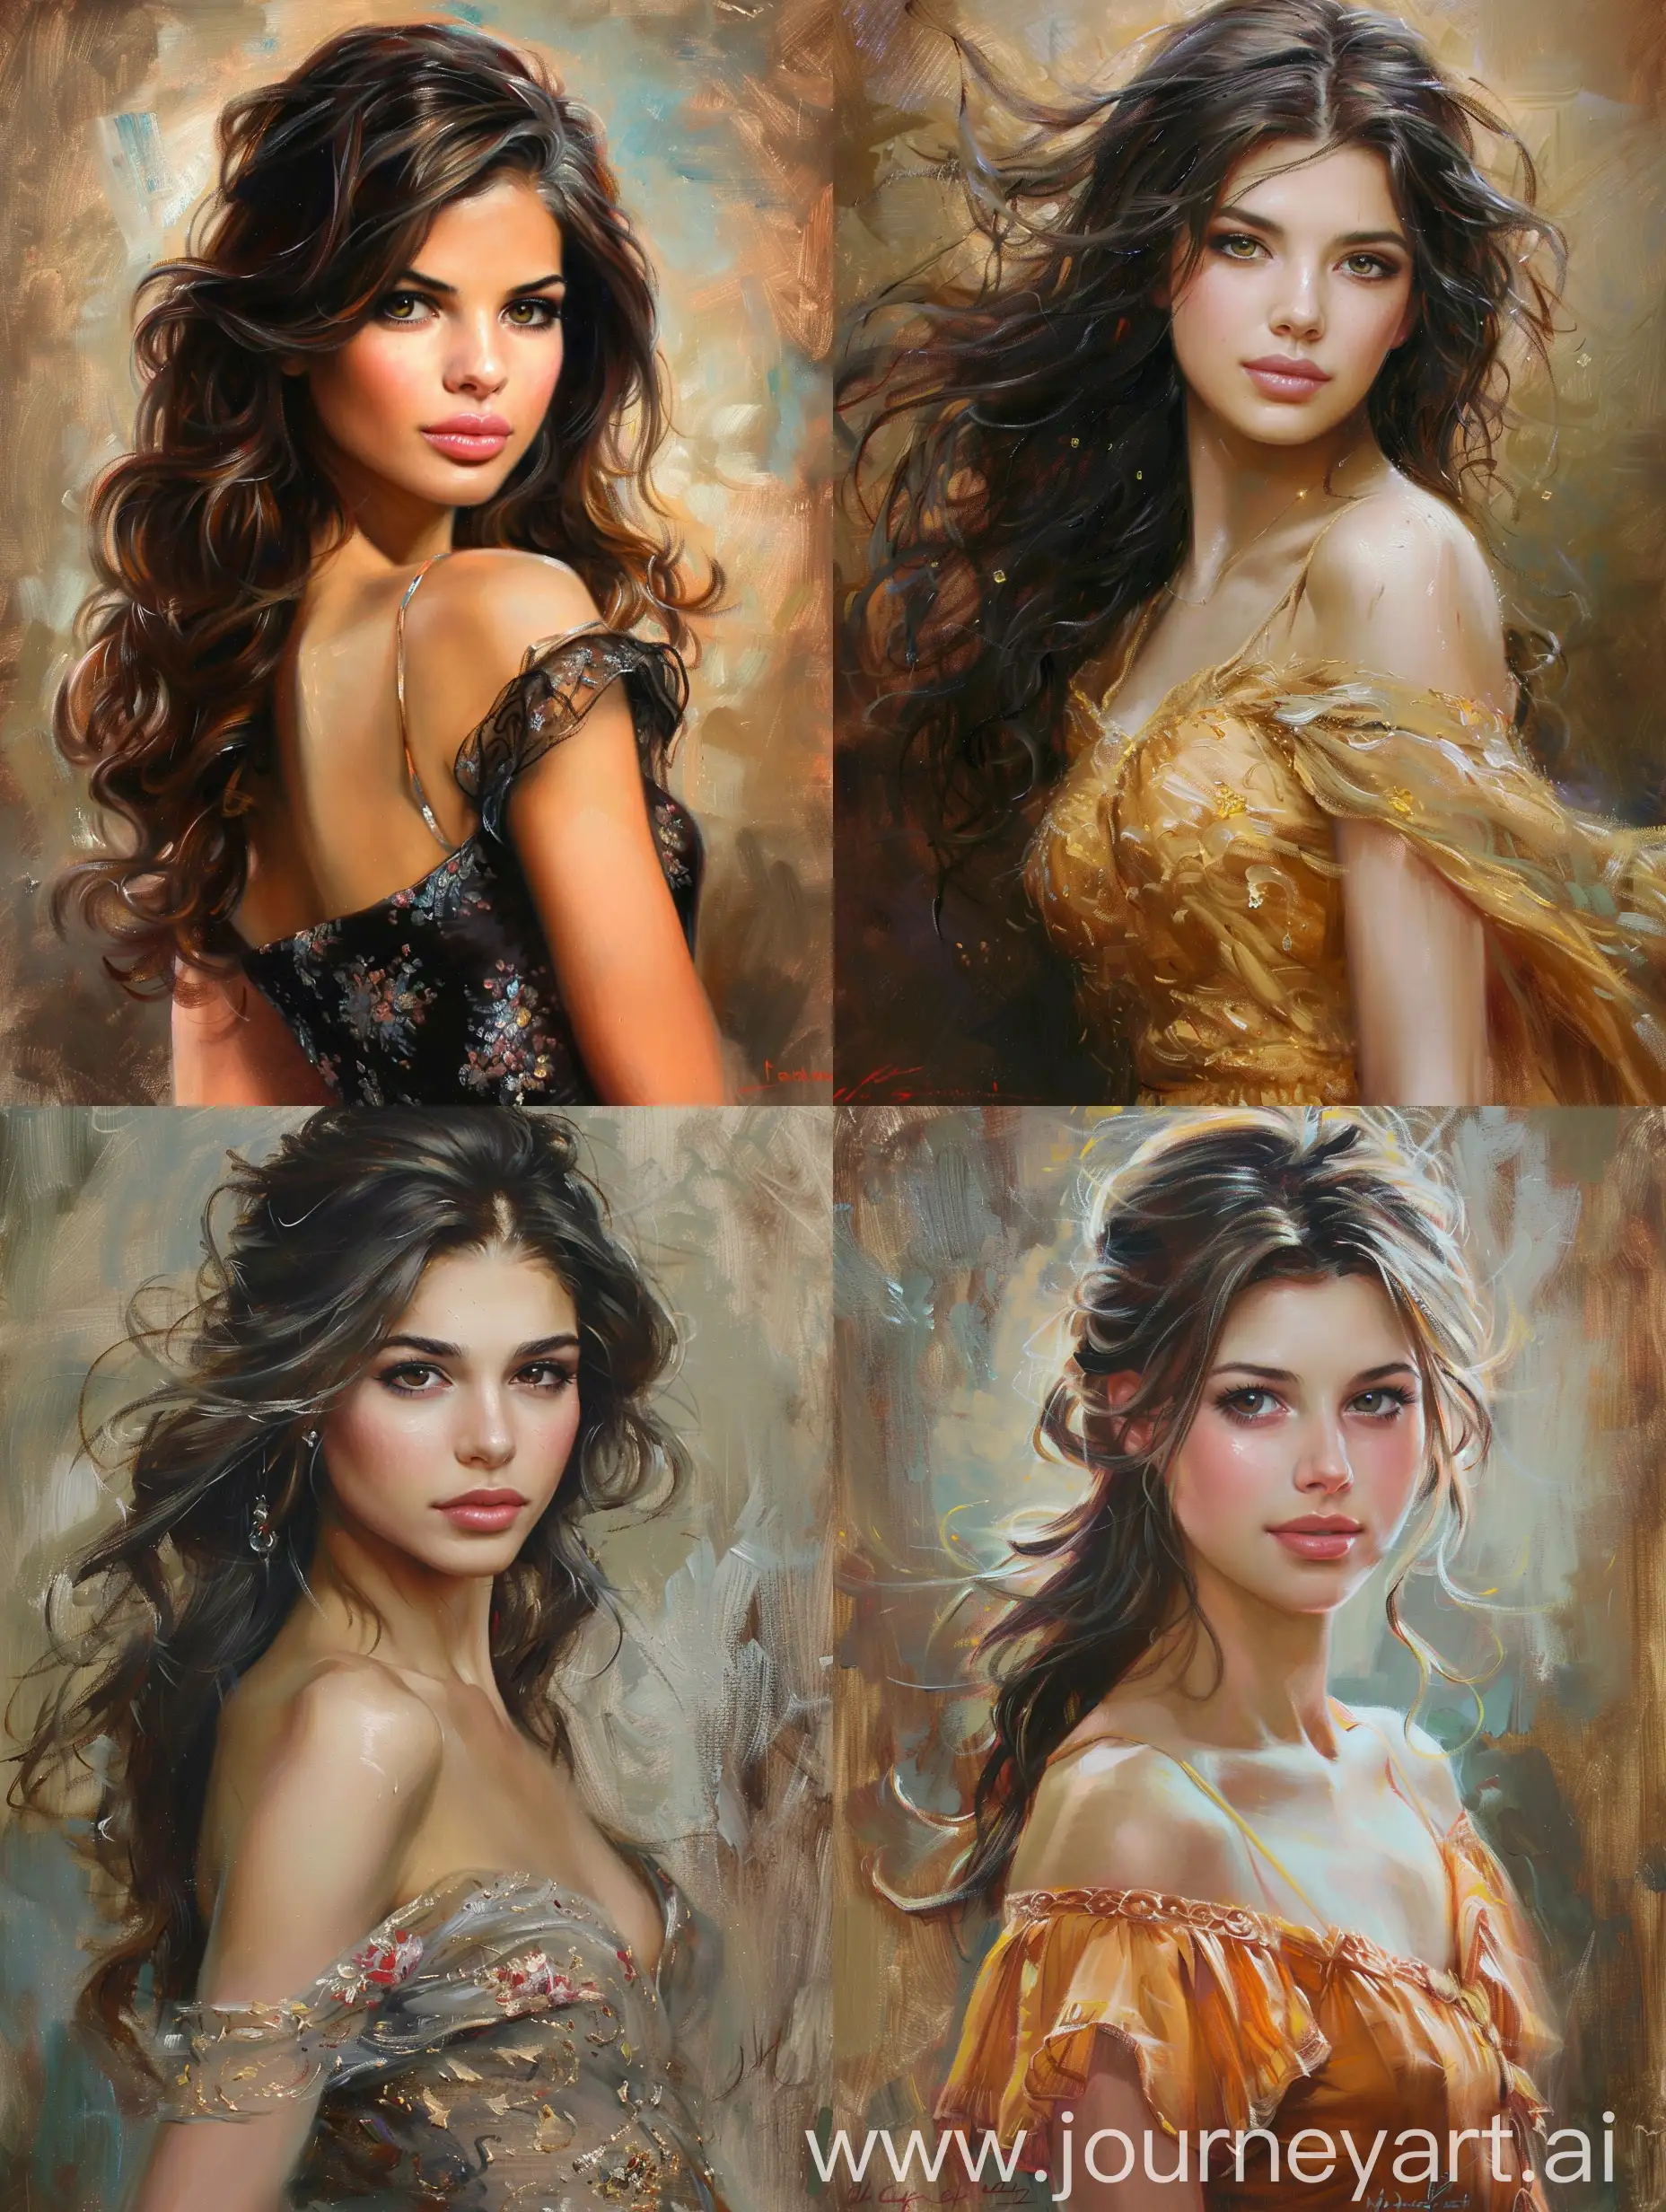 Beautiful woman, oil painting, flowing hair, elegant dress, mesmerizing eyes, high quality, realistic, warm tones, soft lighting.